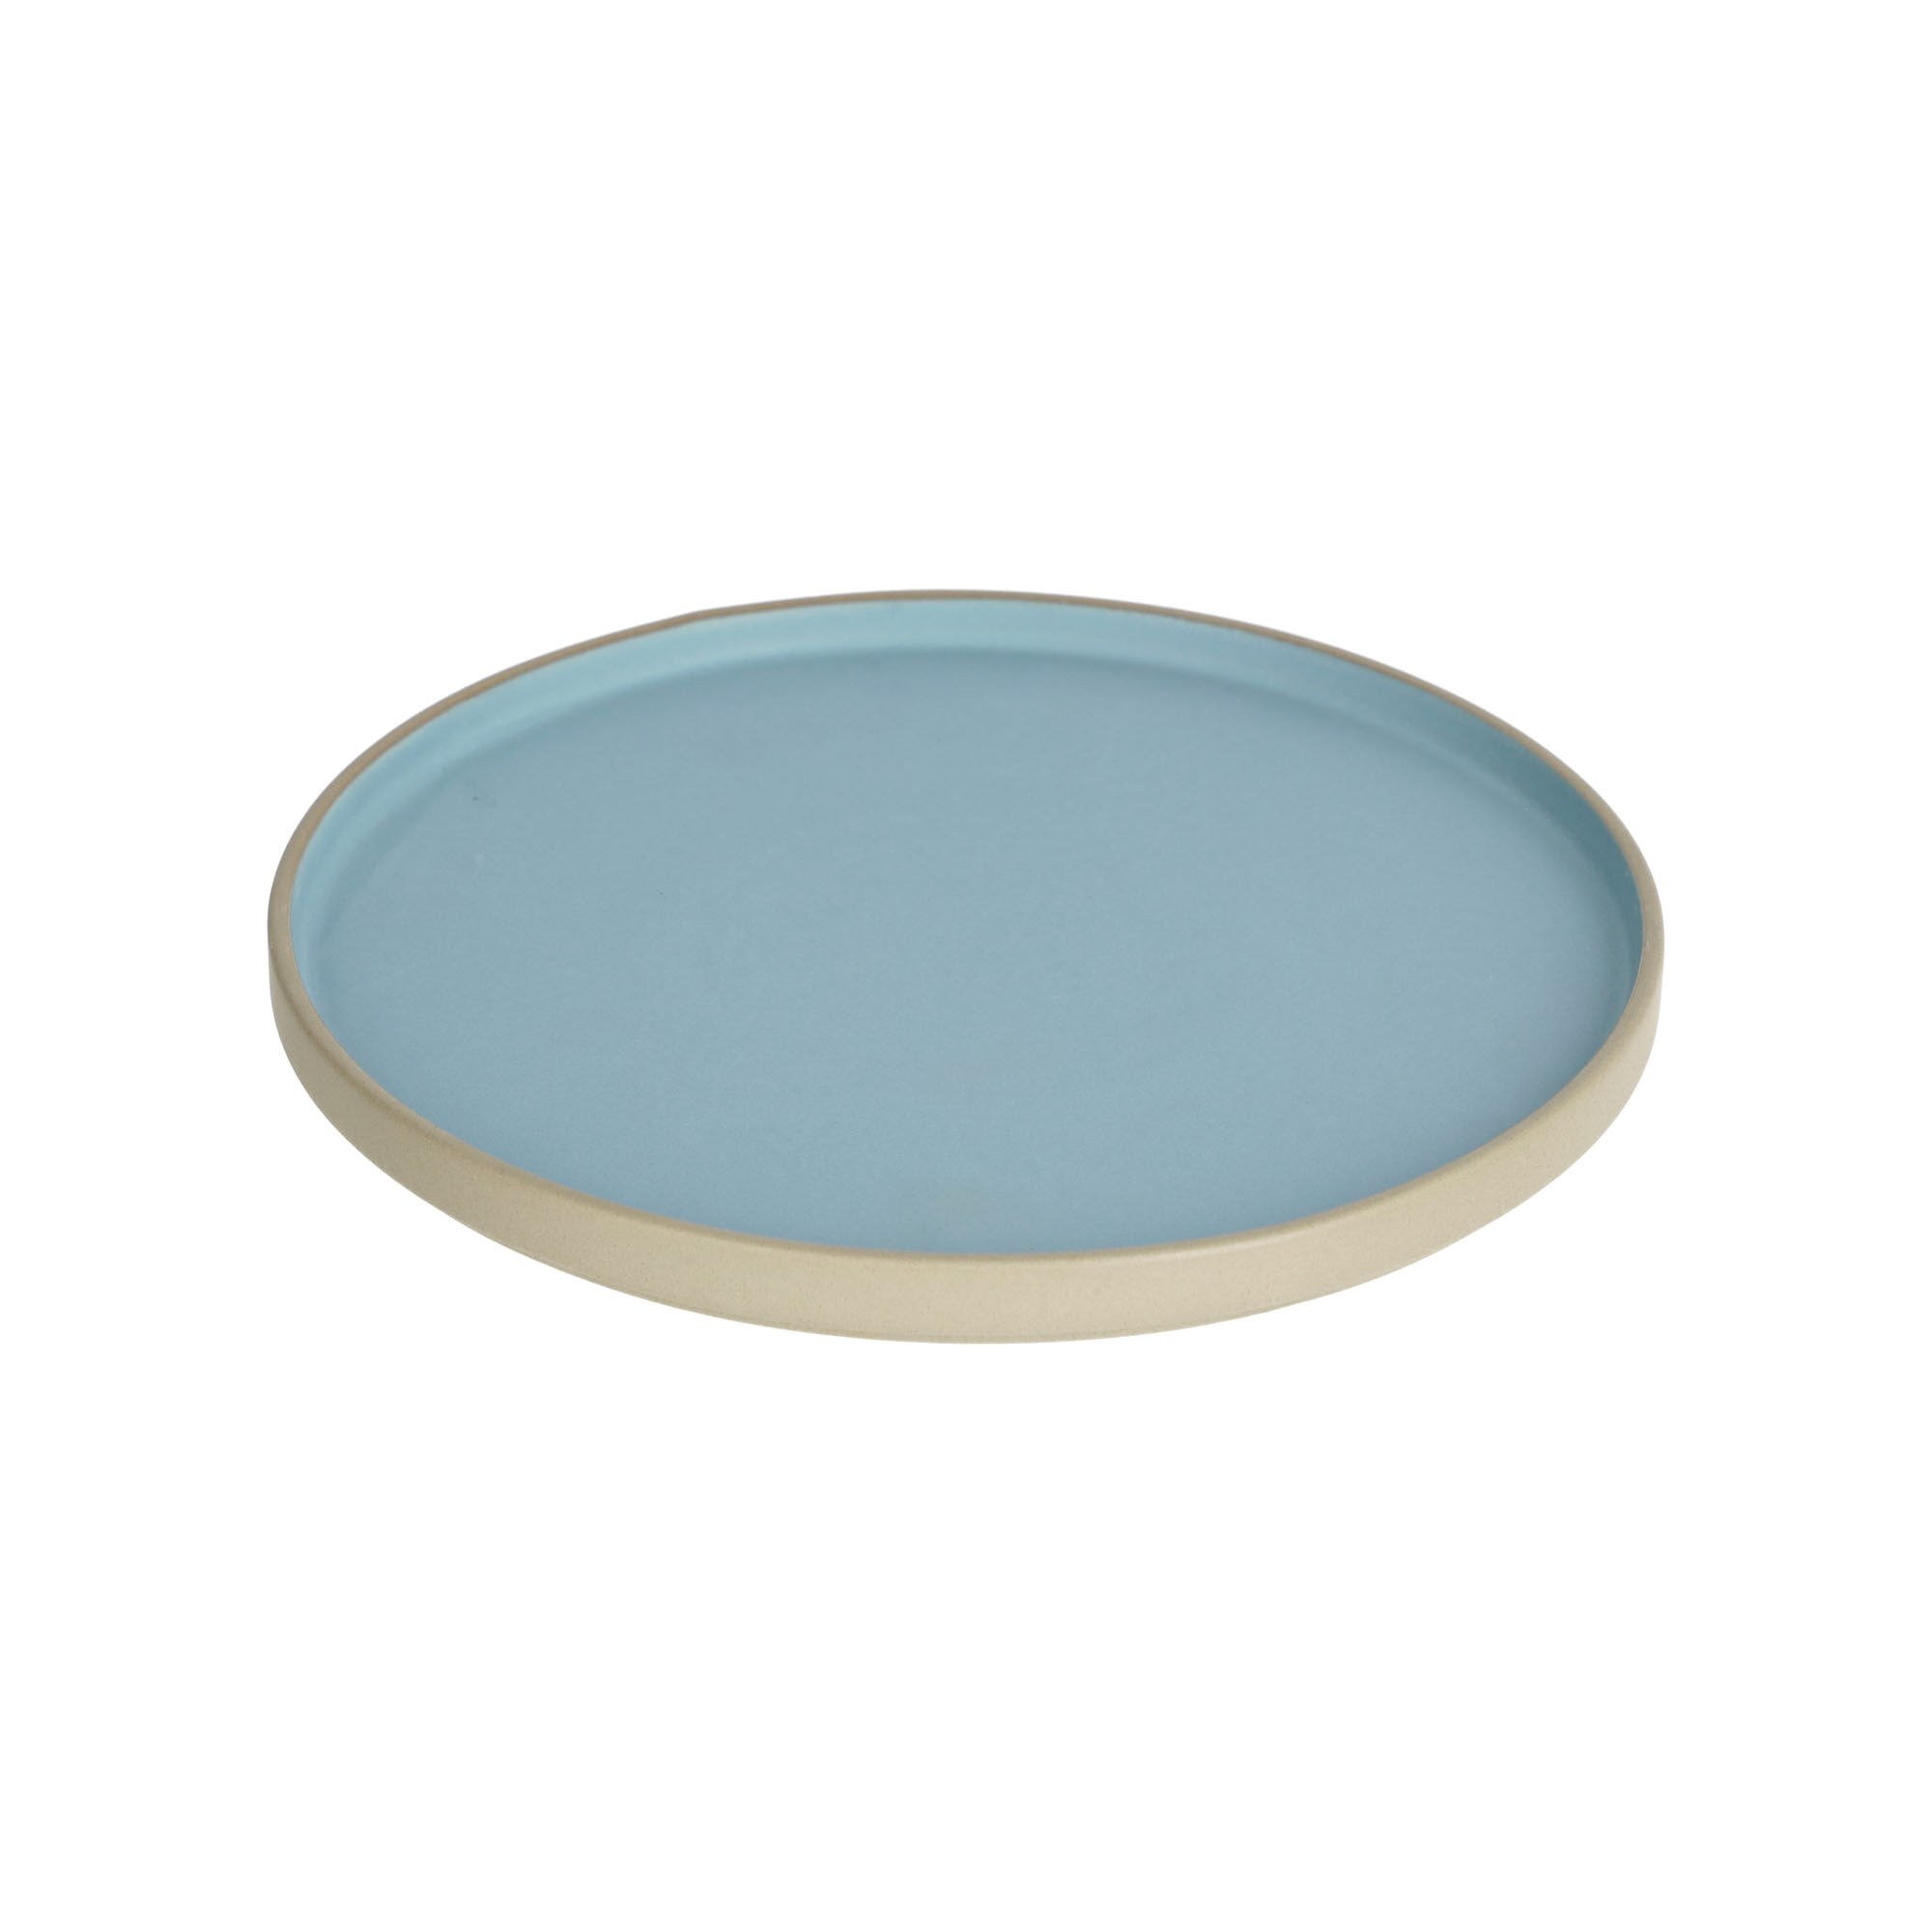 Kave Home Midori ceramic dinner plate in blue